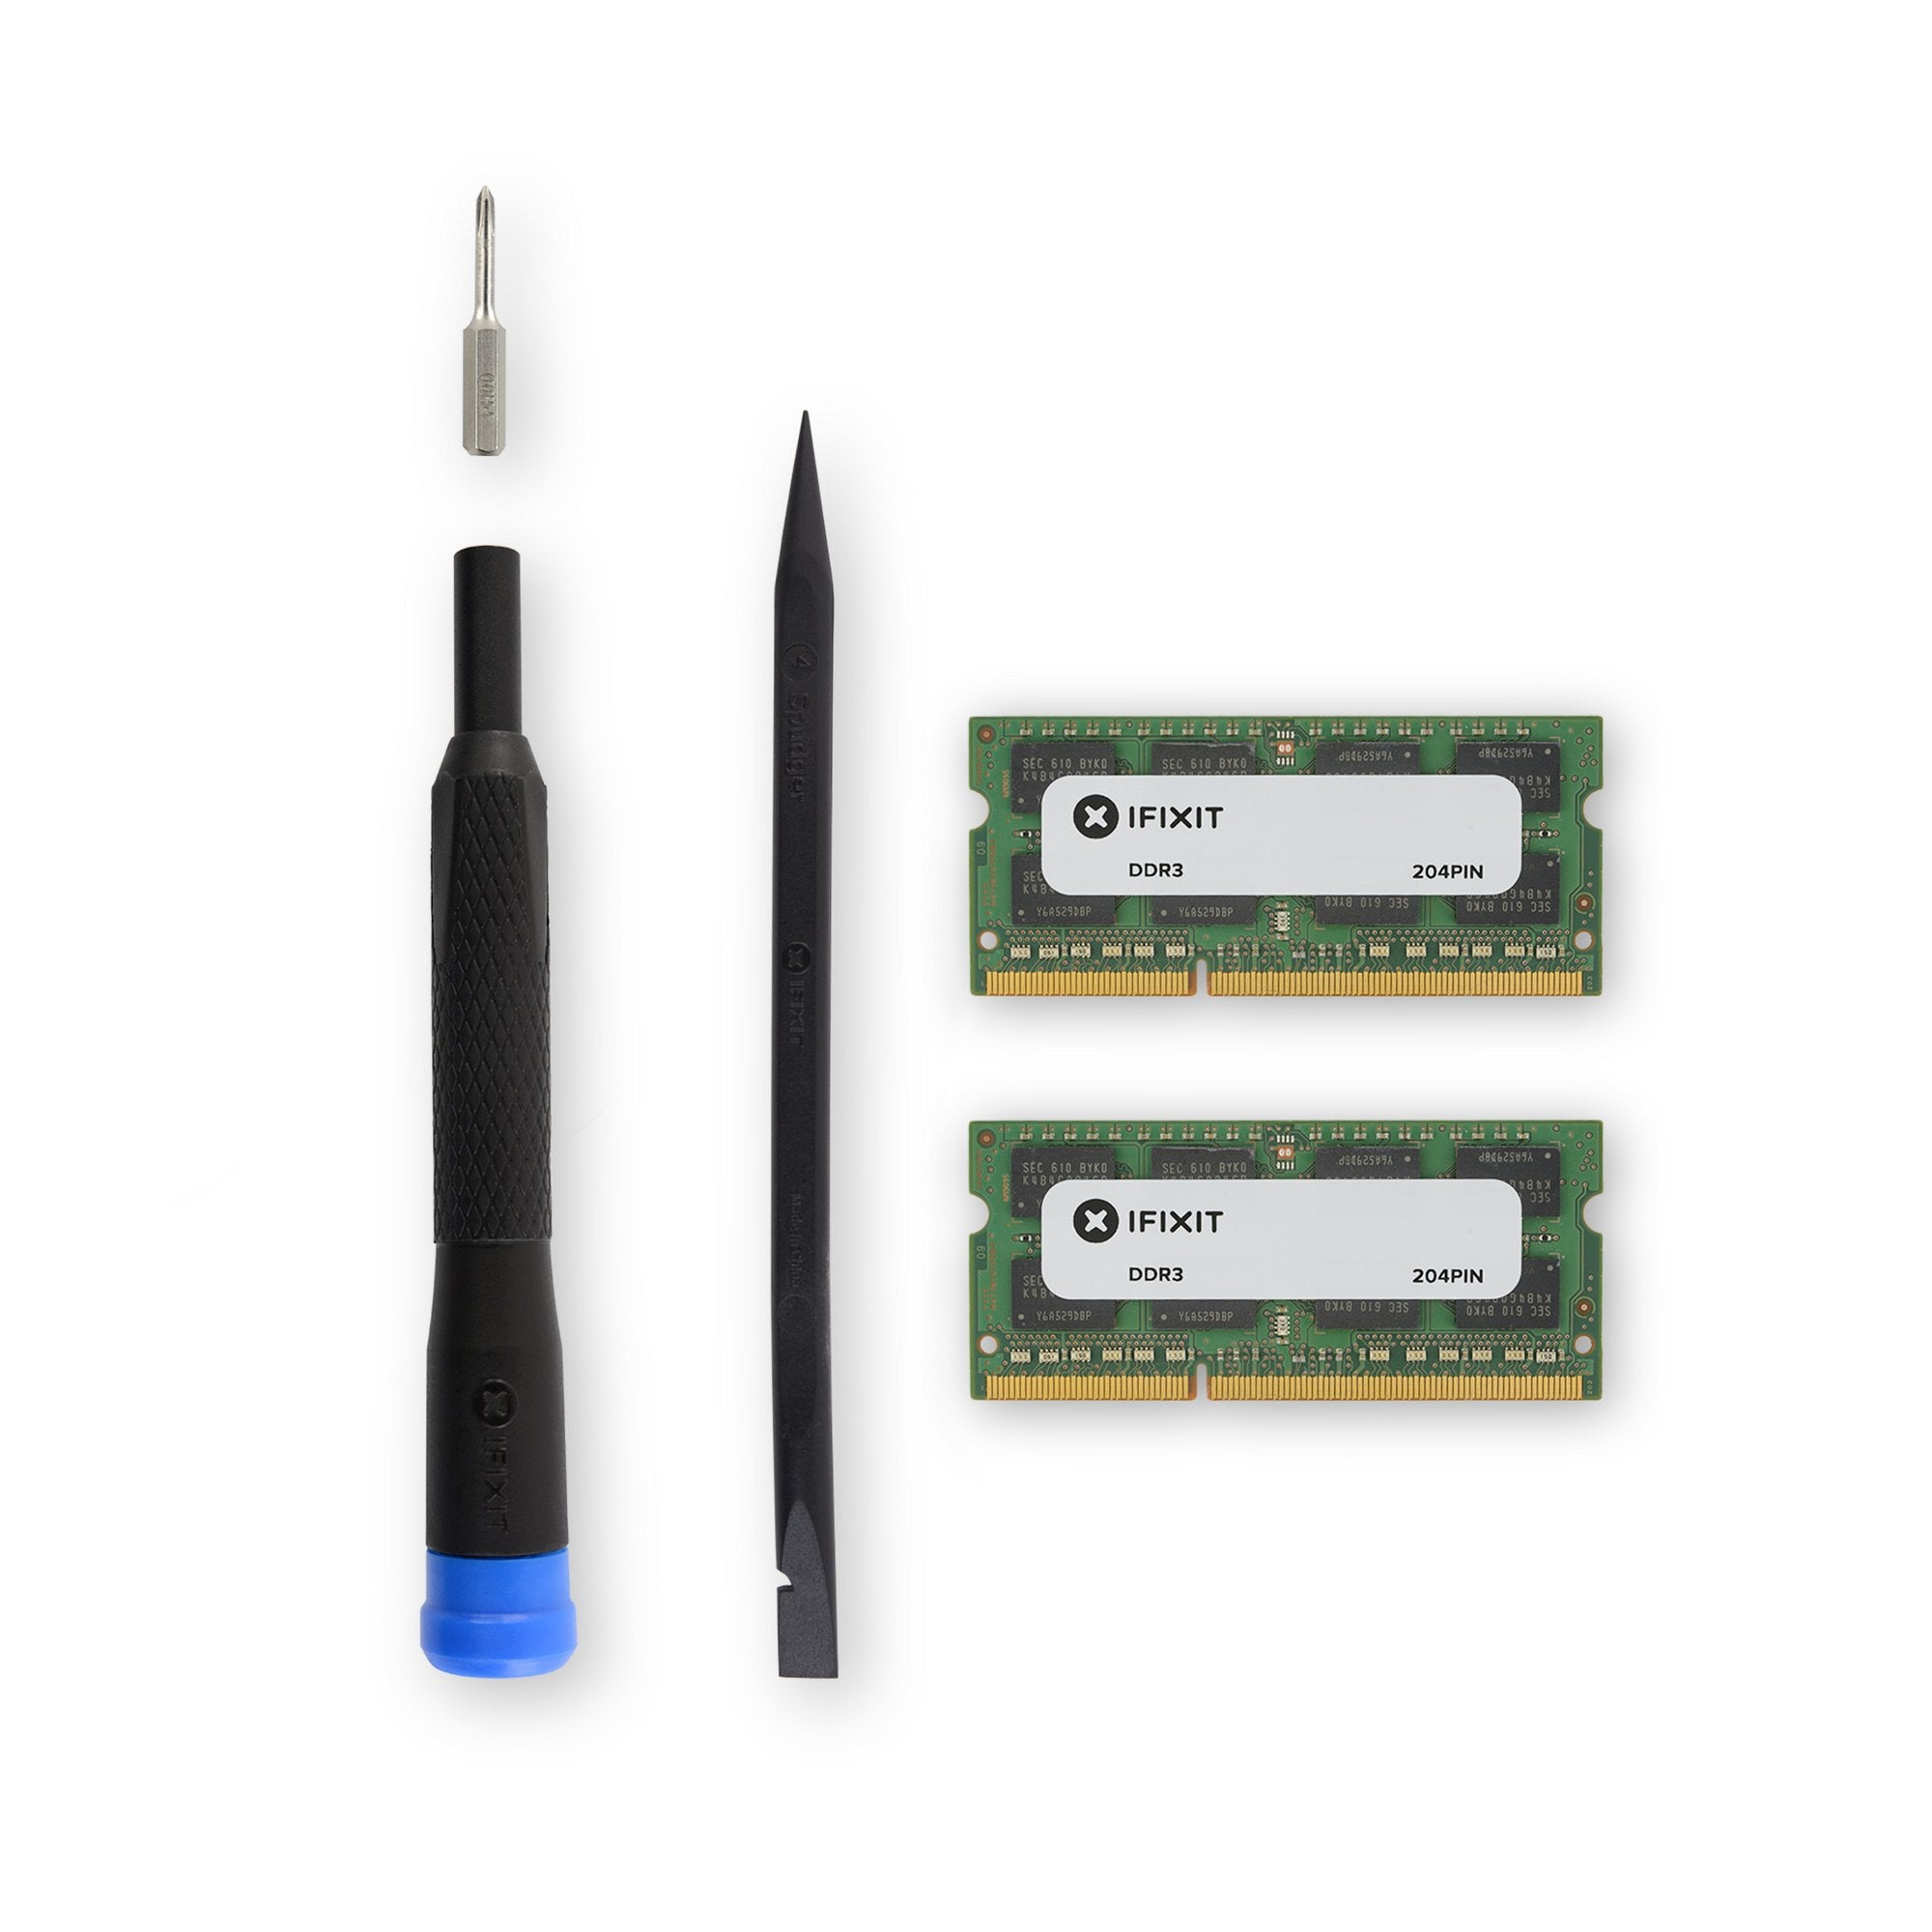 MacBook Pro 15" Unibody (Early 2011) Memory Maxxer RAM Upgrade Kit New